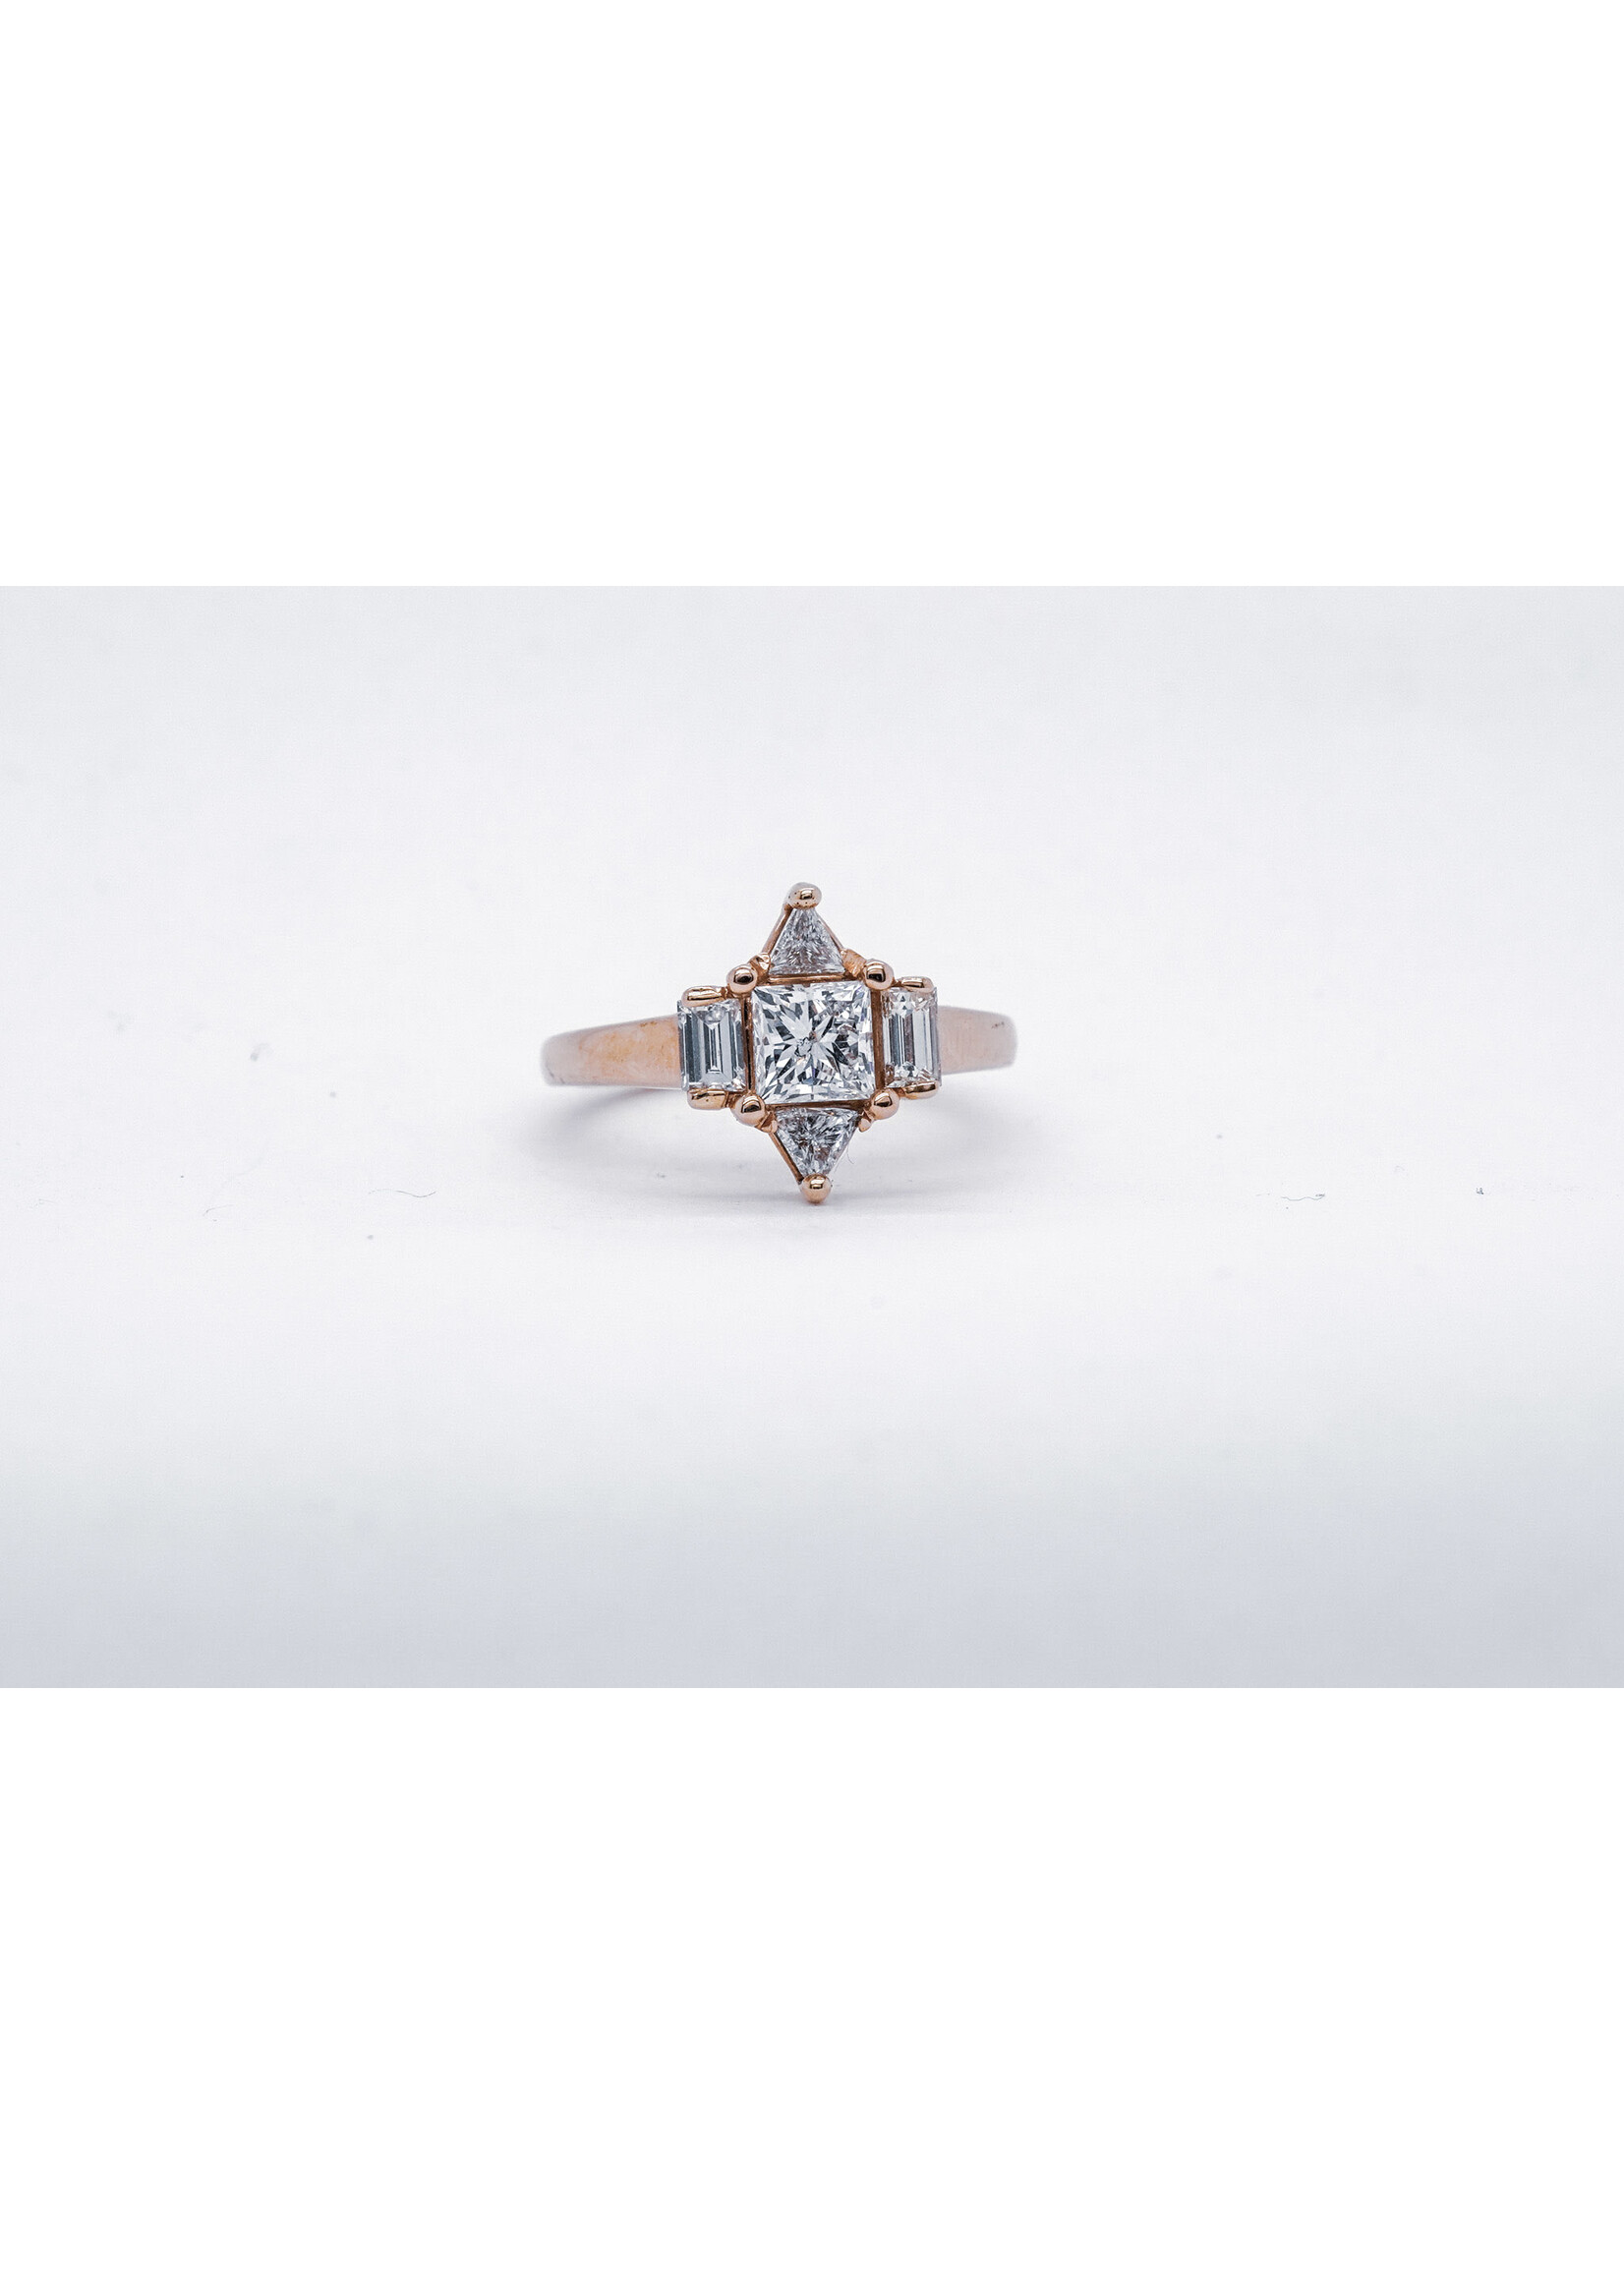 14KR 4.3g 1.32ctw (.78ctr) G/I1 Princess Cut Diamond Geometric Engagement Ring (size 5)